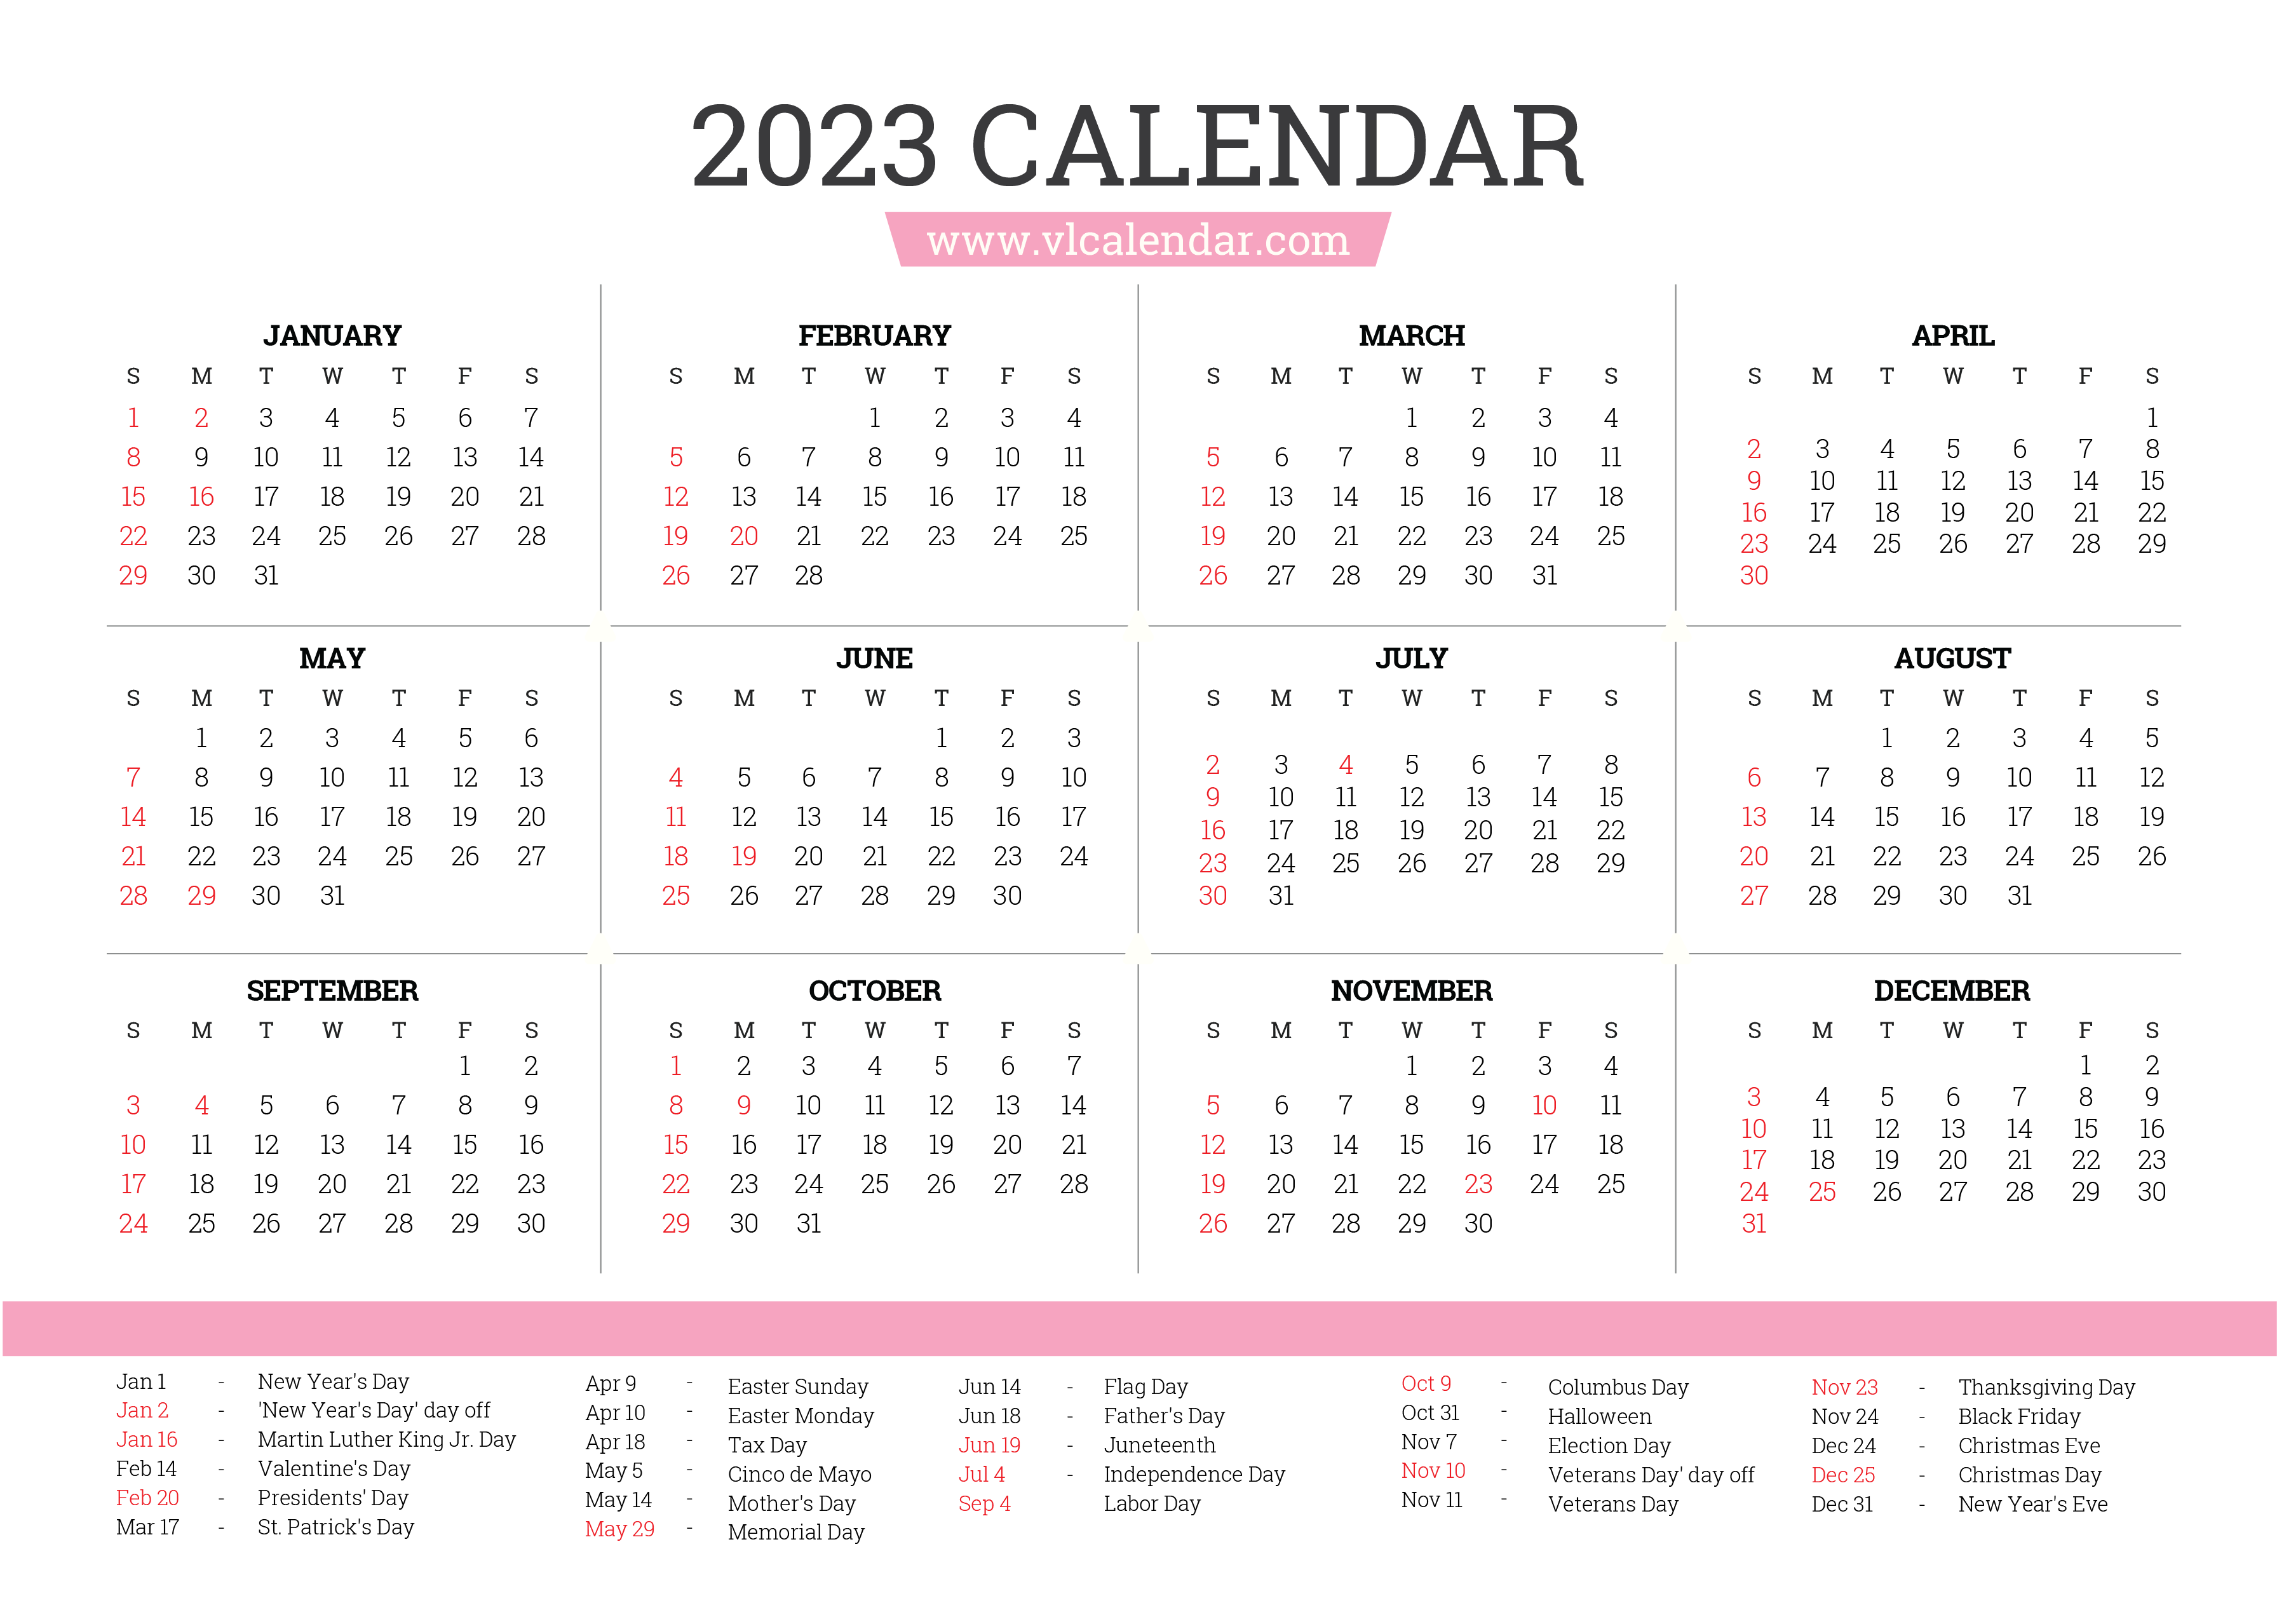 Year 2023 Calendar Printable Templates with Holidays - VL Calendar